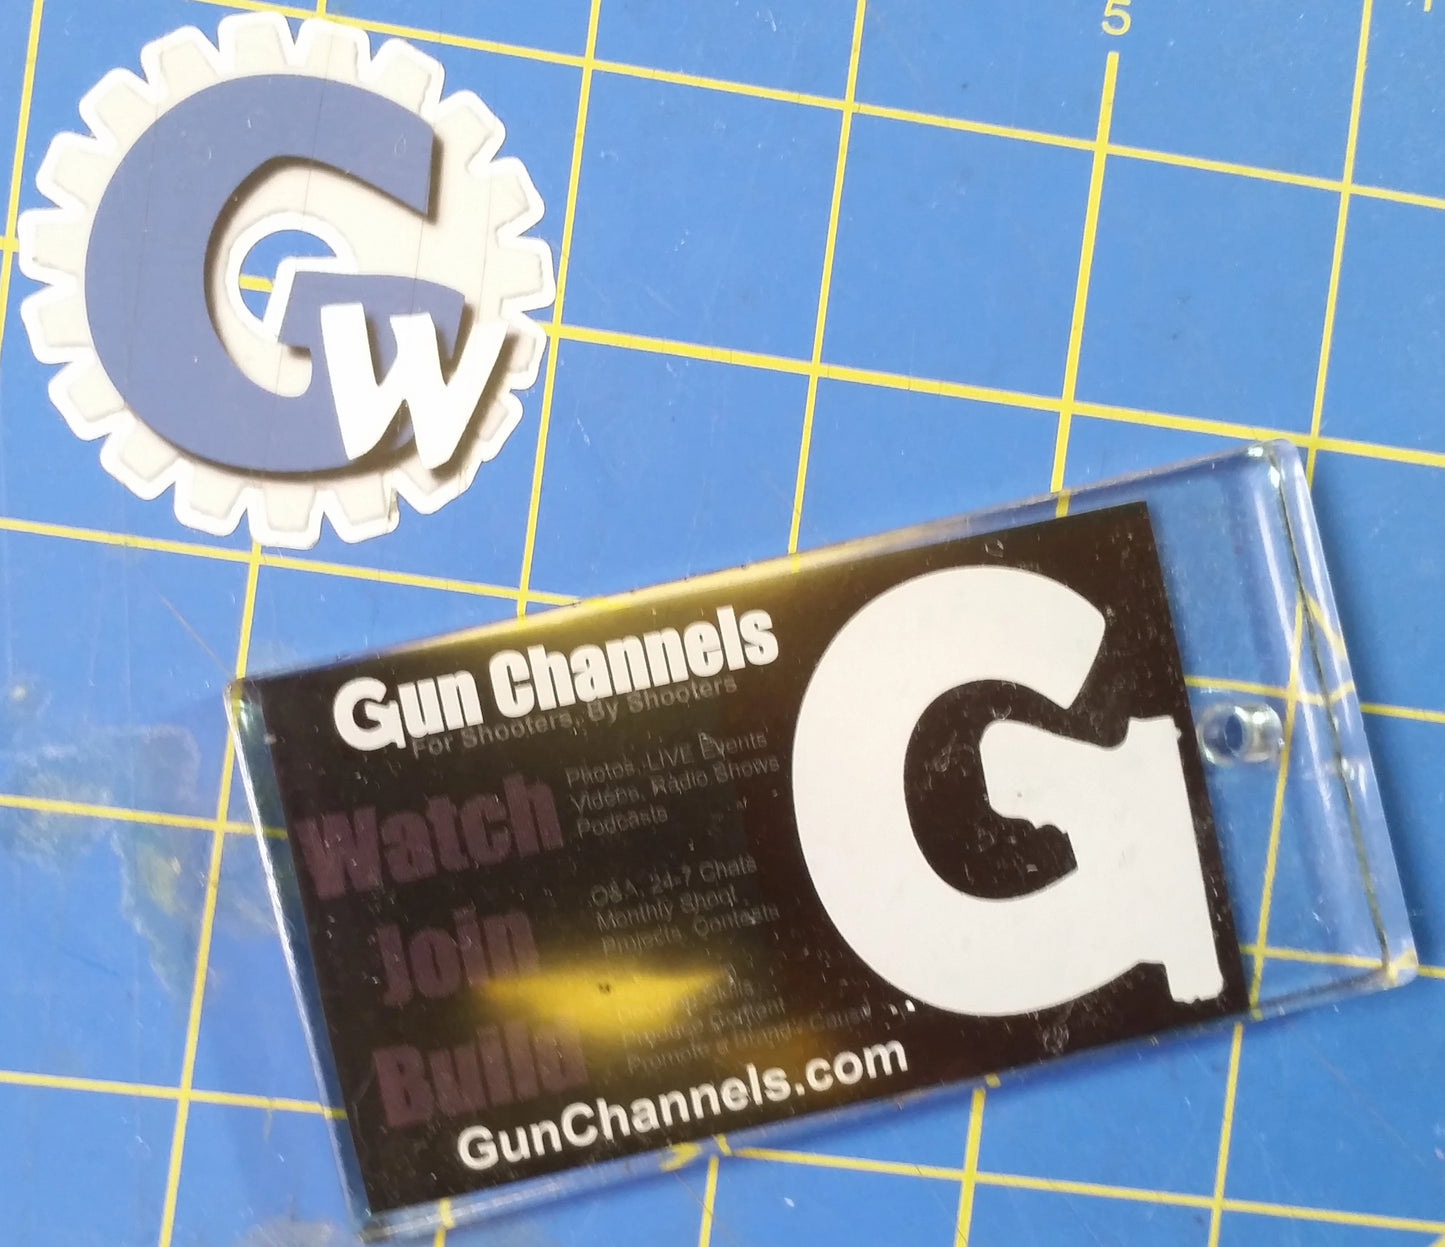 Gun Channels - New Media Press Pass